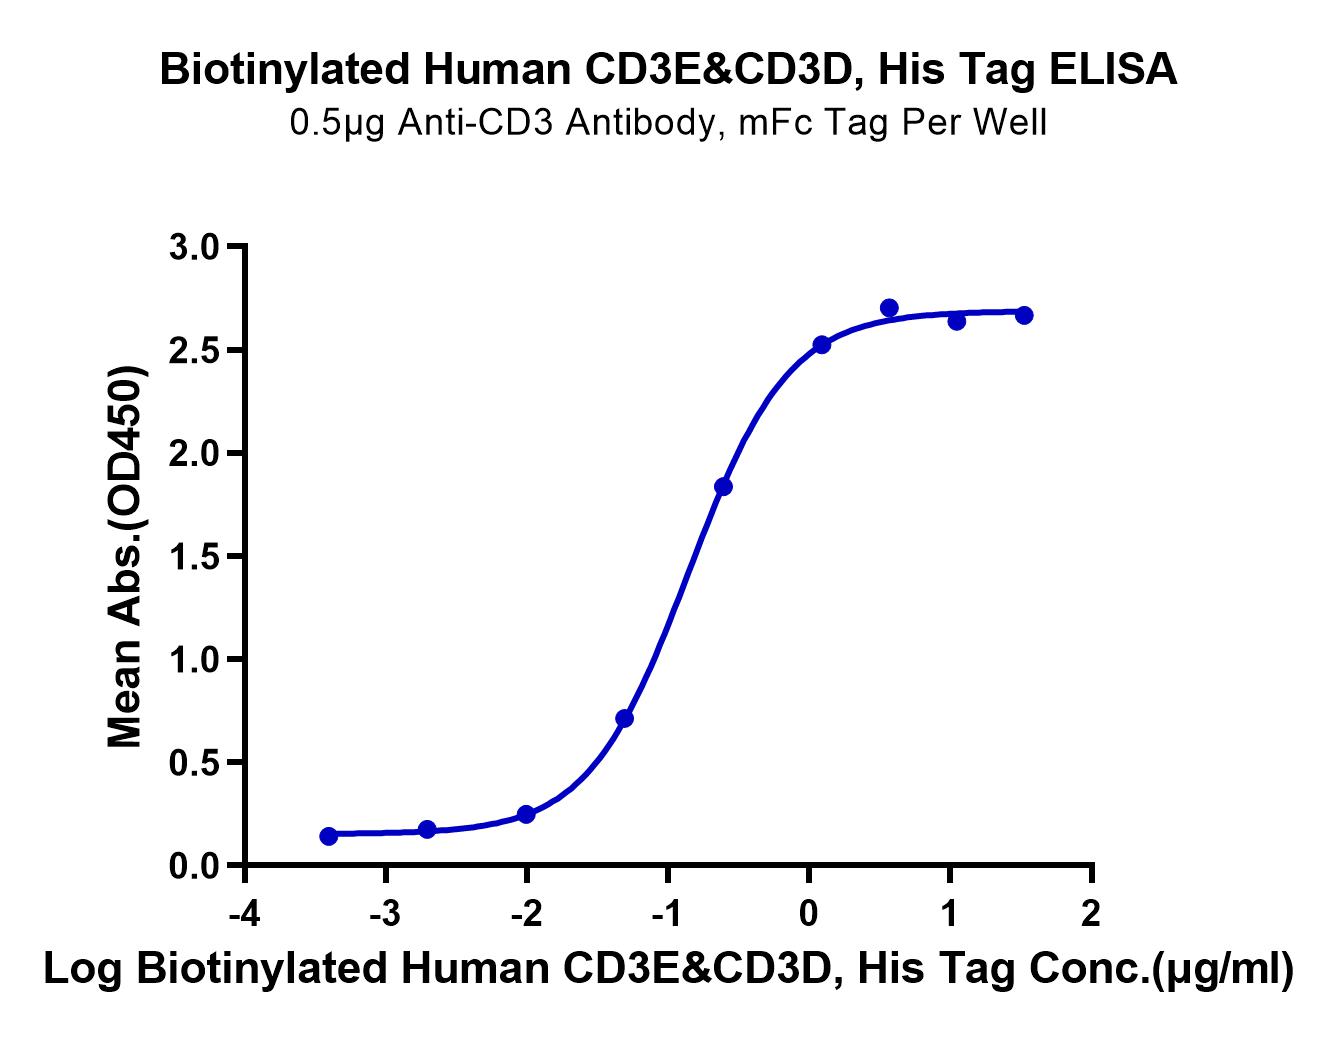 Biotinylated Human CD3E&CD3D/CD3 epsilon&CD3 delta Protein (Primary Amine Labeling) (LTP10068)